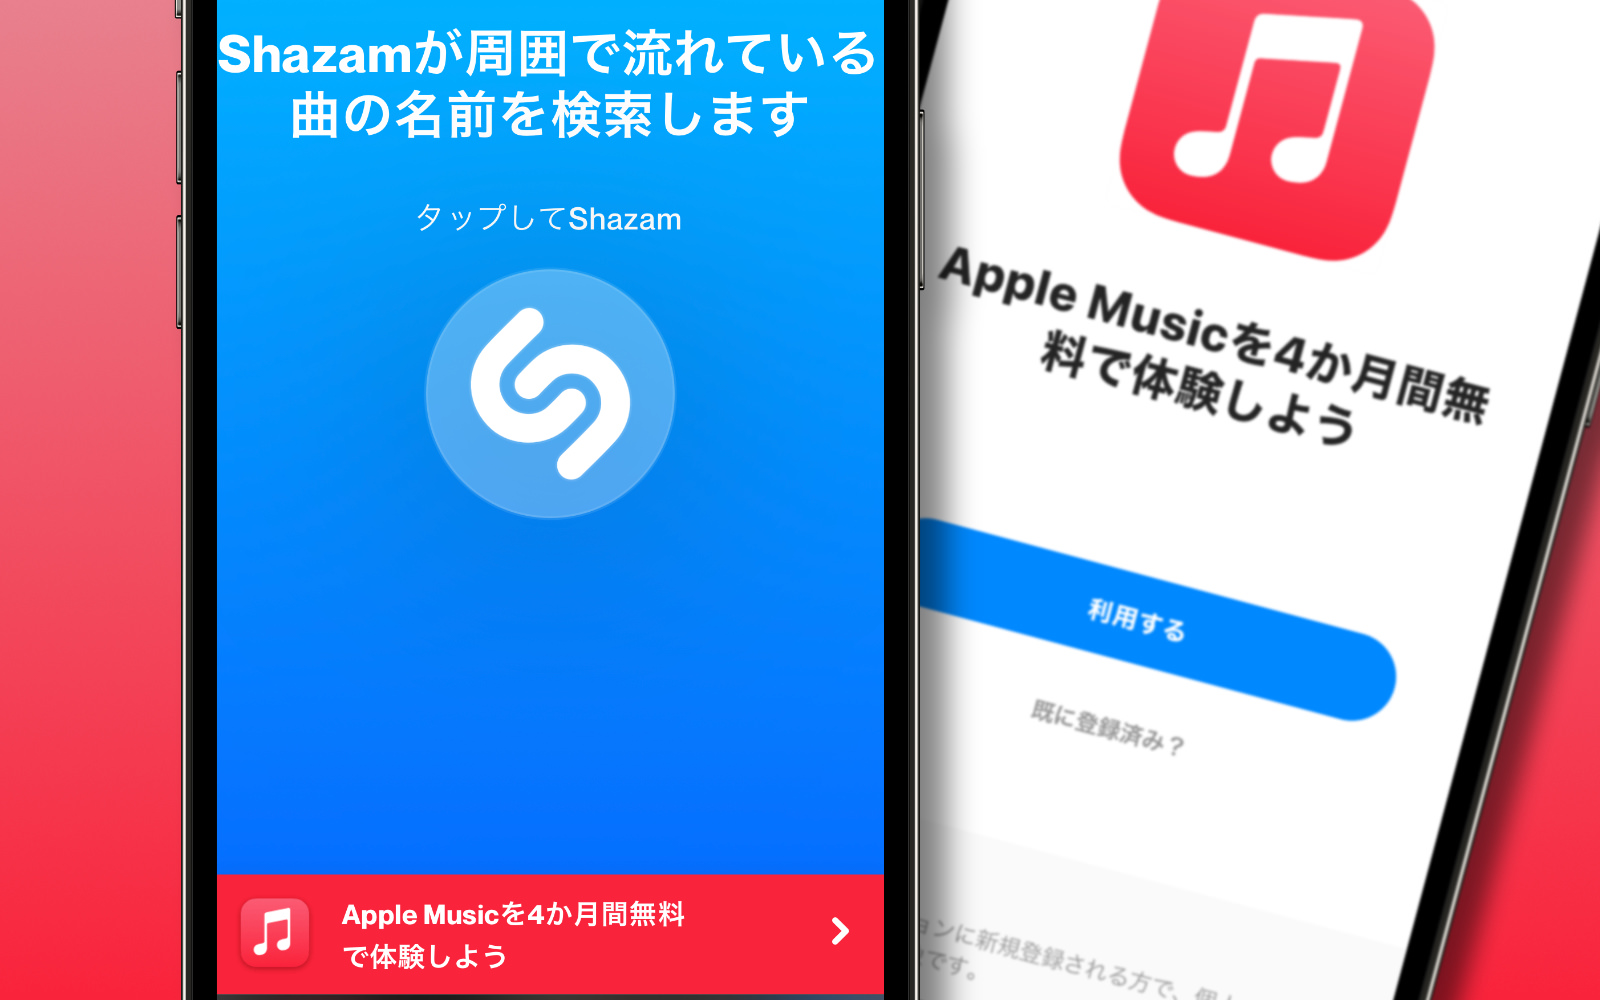 Shazam three month free of apple music